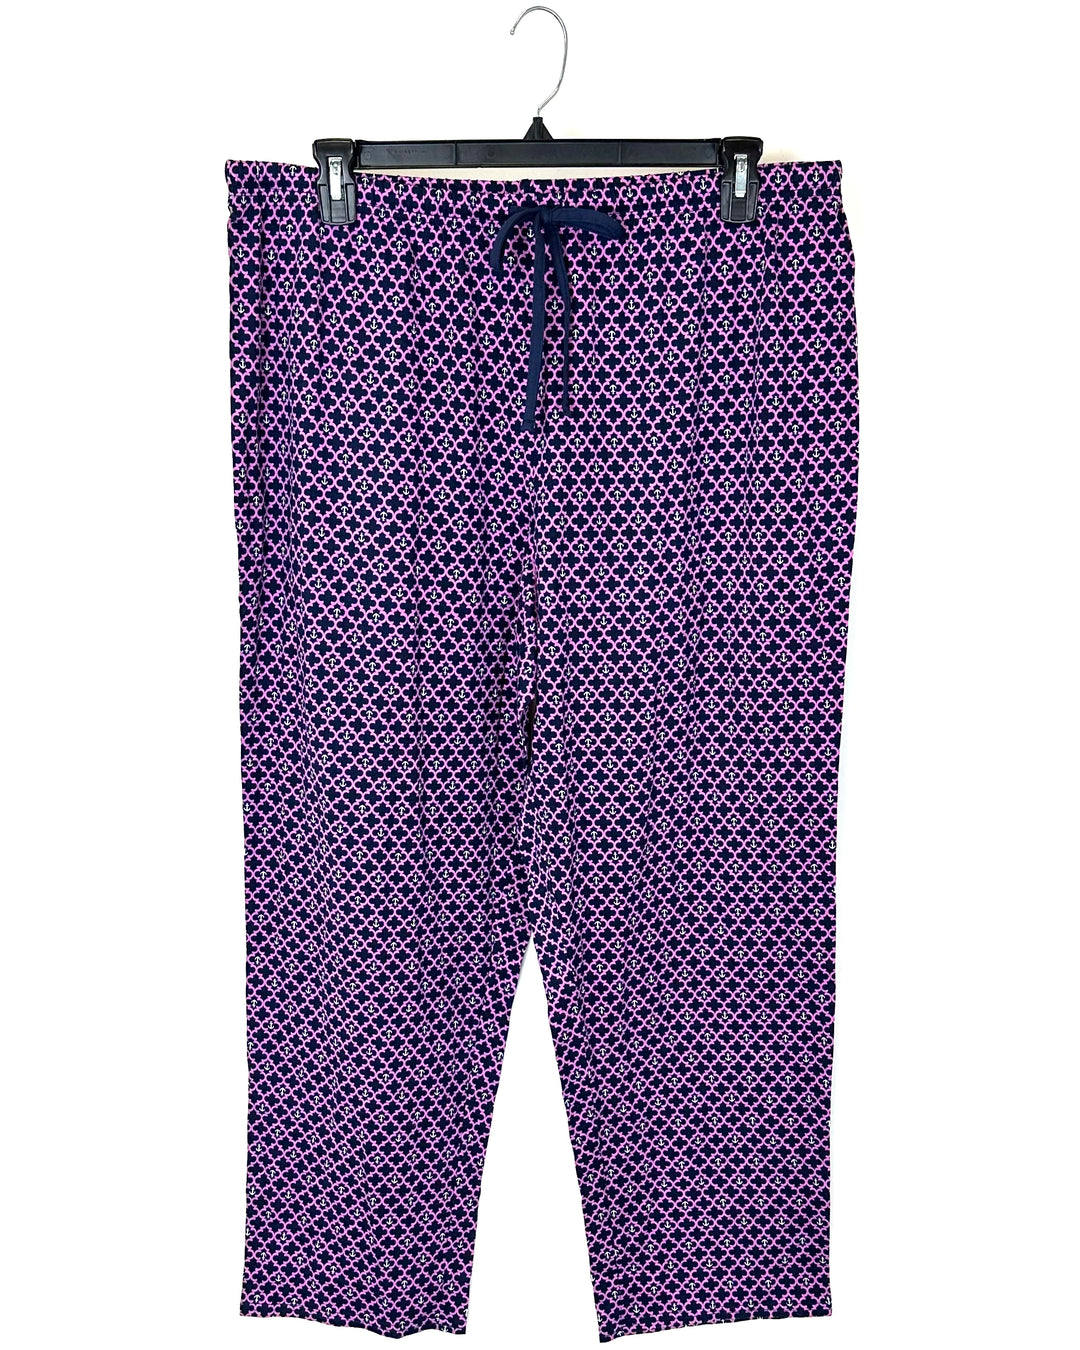 Anchor Pajama Pants - Small and 1X